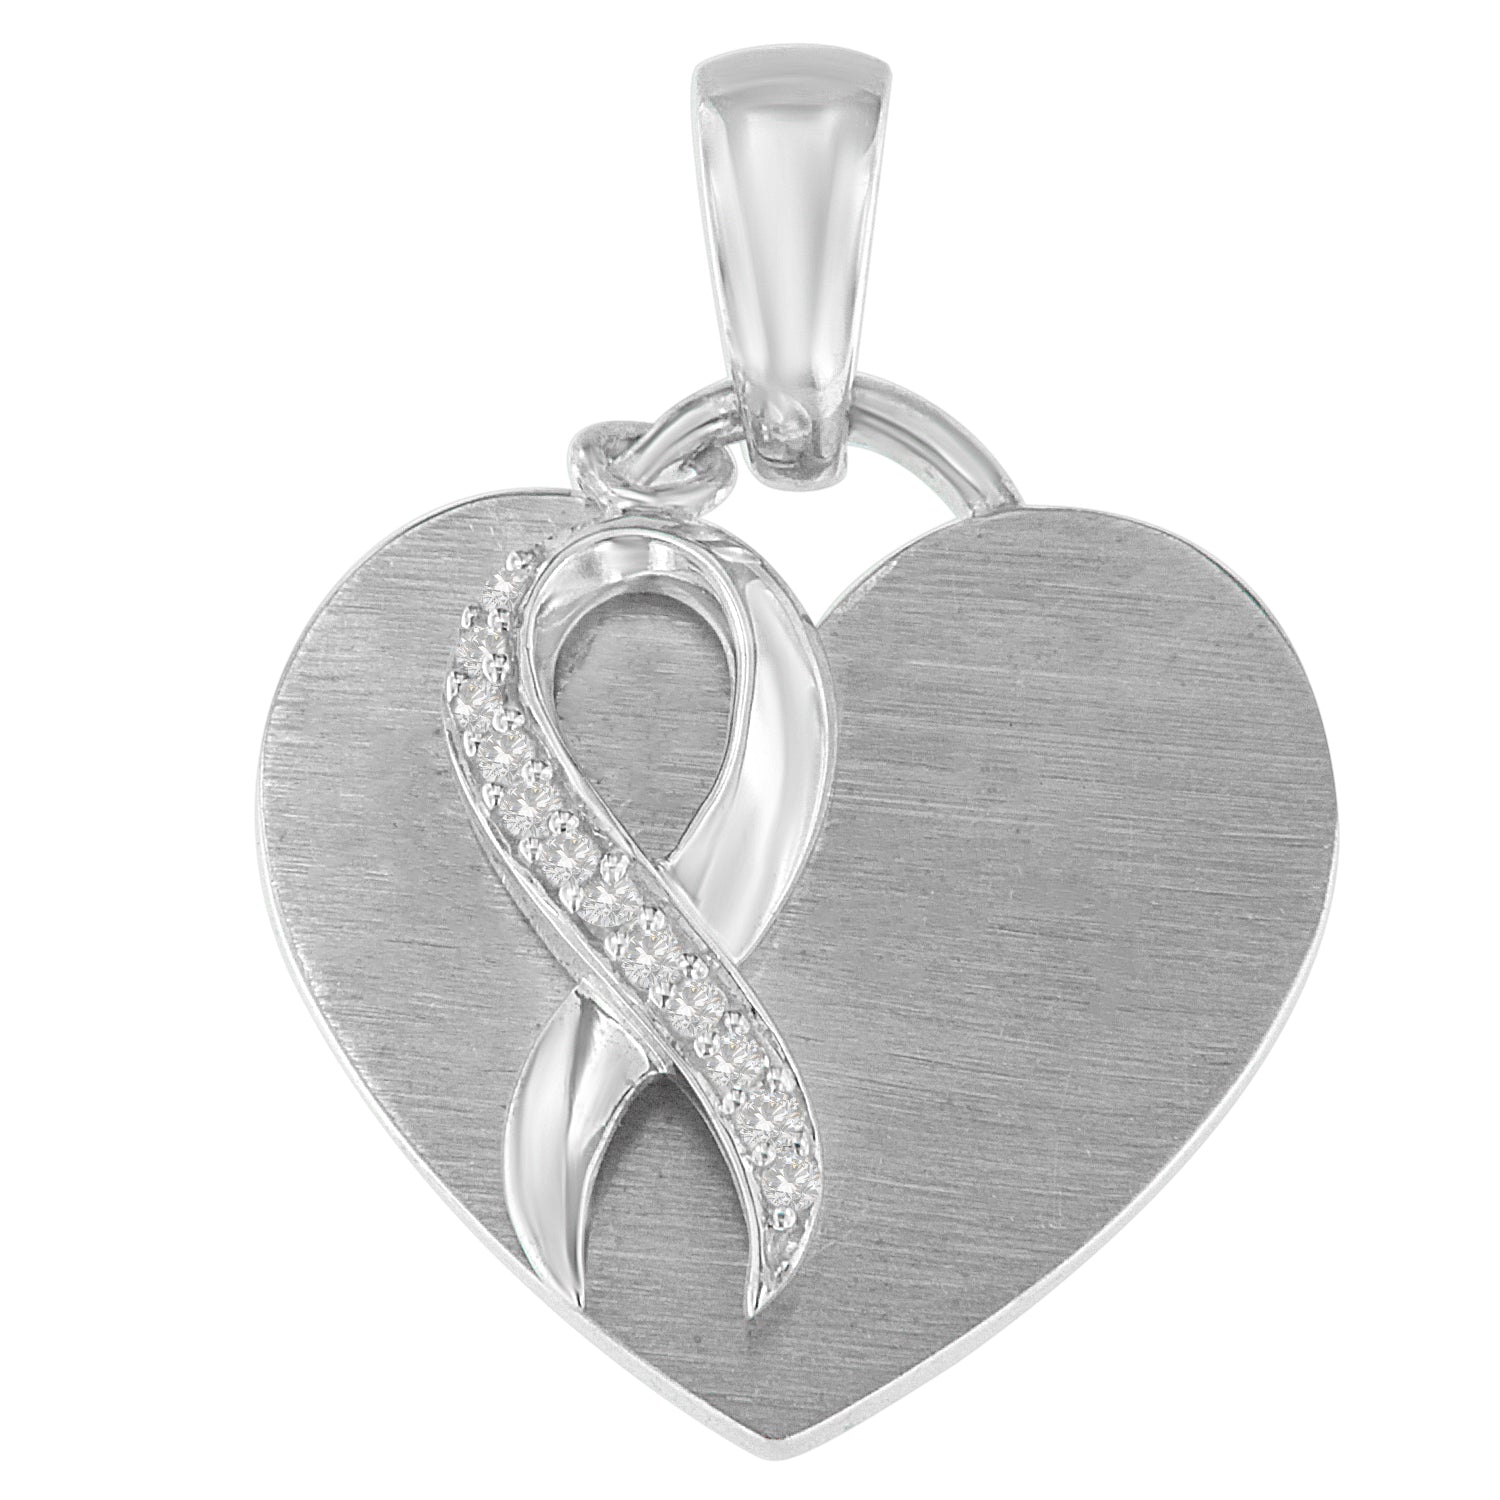 .925 Sterling Silver 1/10 cttw Diamond Heart Pendant Necklace (H-I, I1-I2) - LinkagejewelrydesignLinkagejewelrydesign